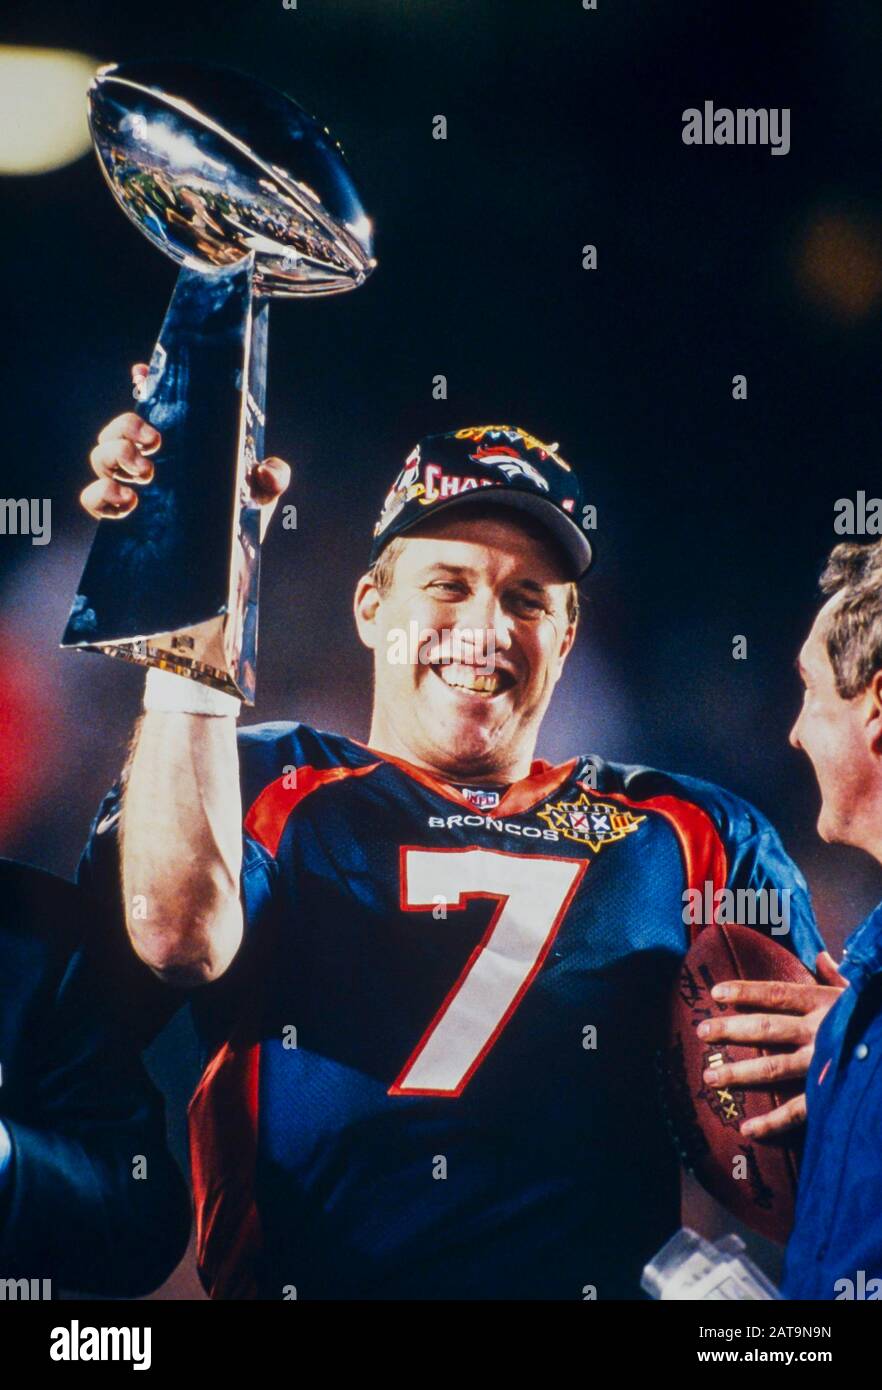 John Elway dei Denver Broncos detiene il trofeo vince Lombardi dopo aver vinto il Super Bowl XXXII il 1/25/98 a San Diego, CA Broncos 31, Packers 24 Foto Stock